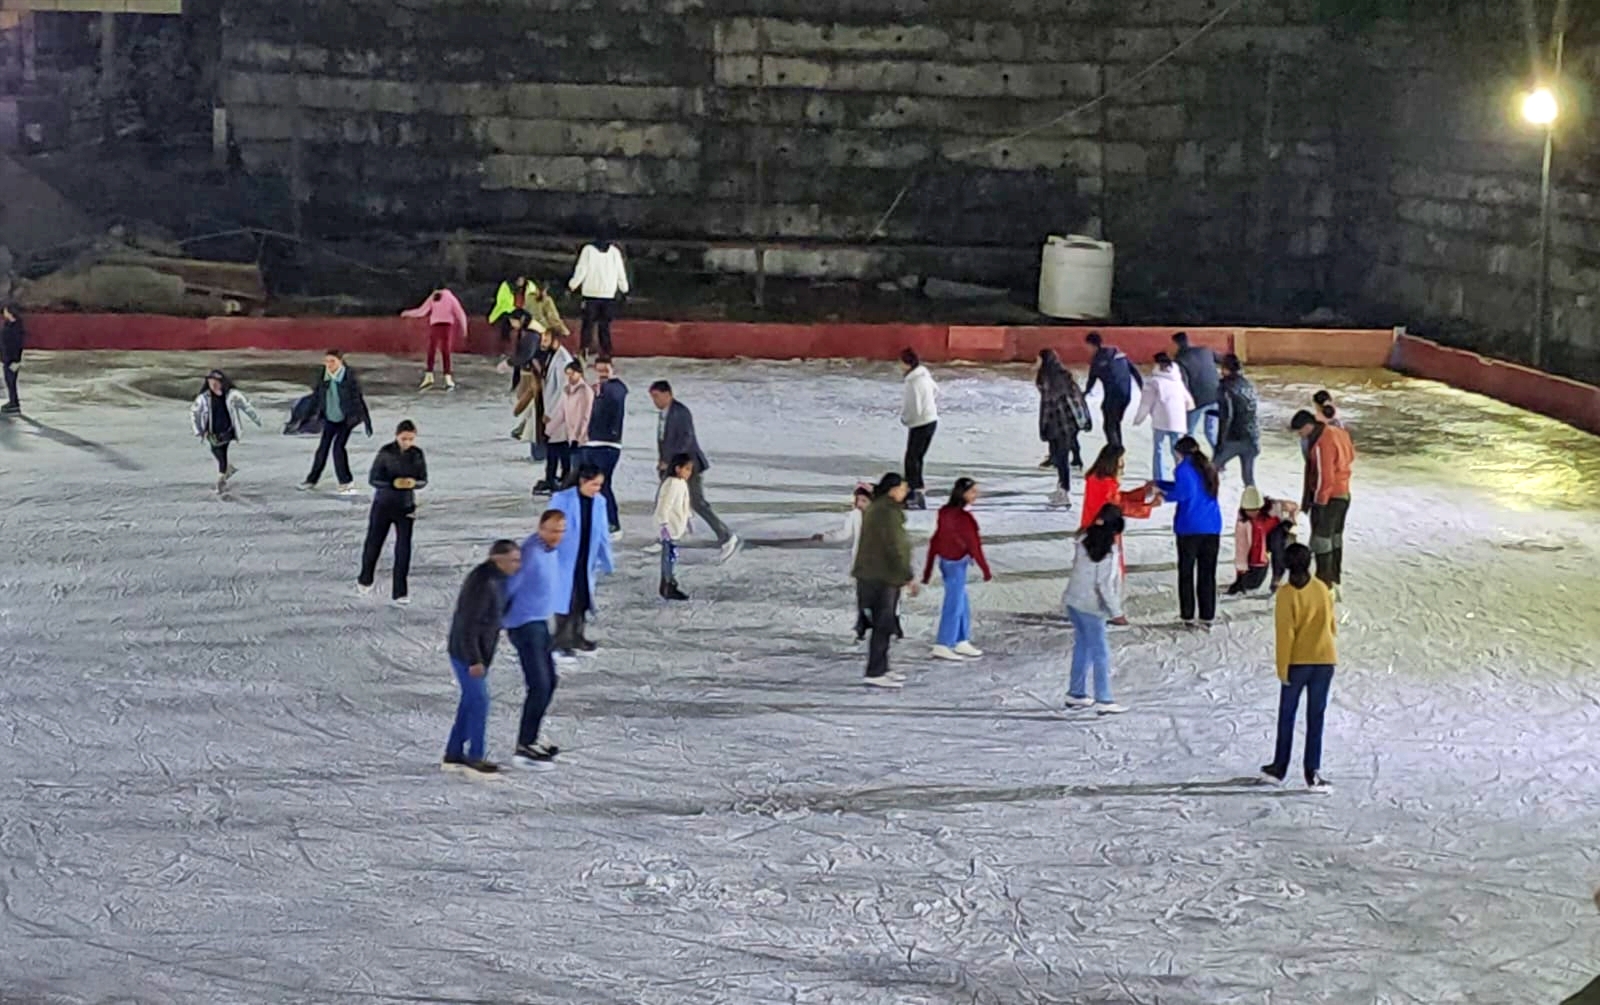 Shimla Ice Skating Rink